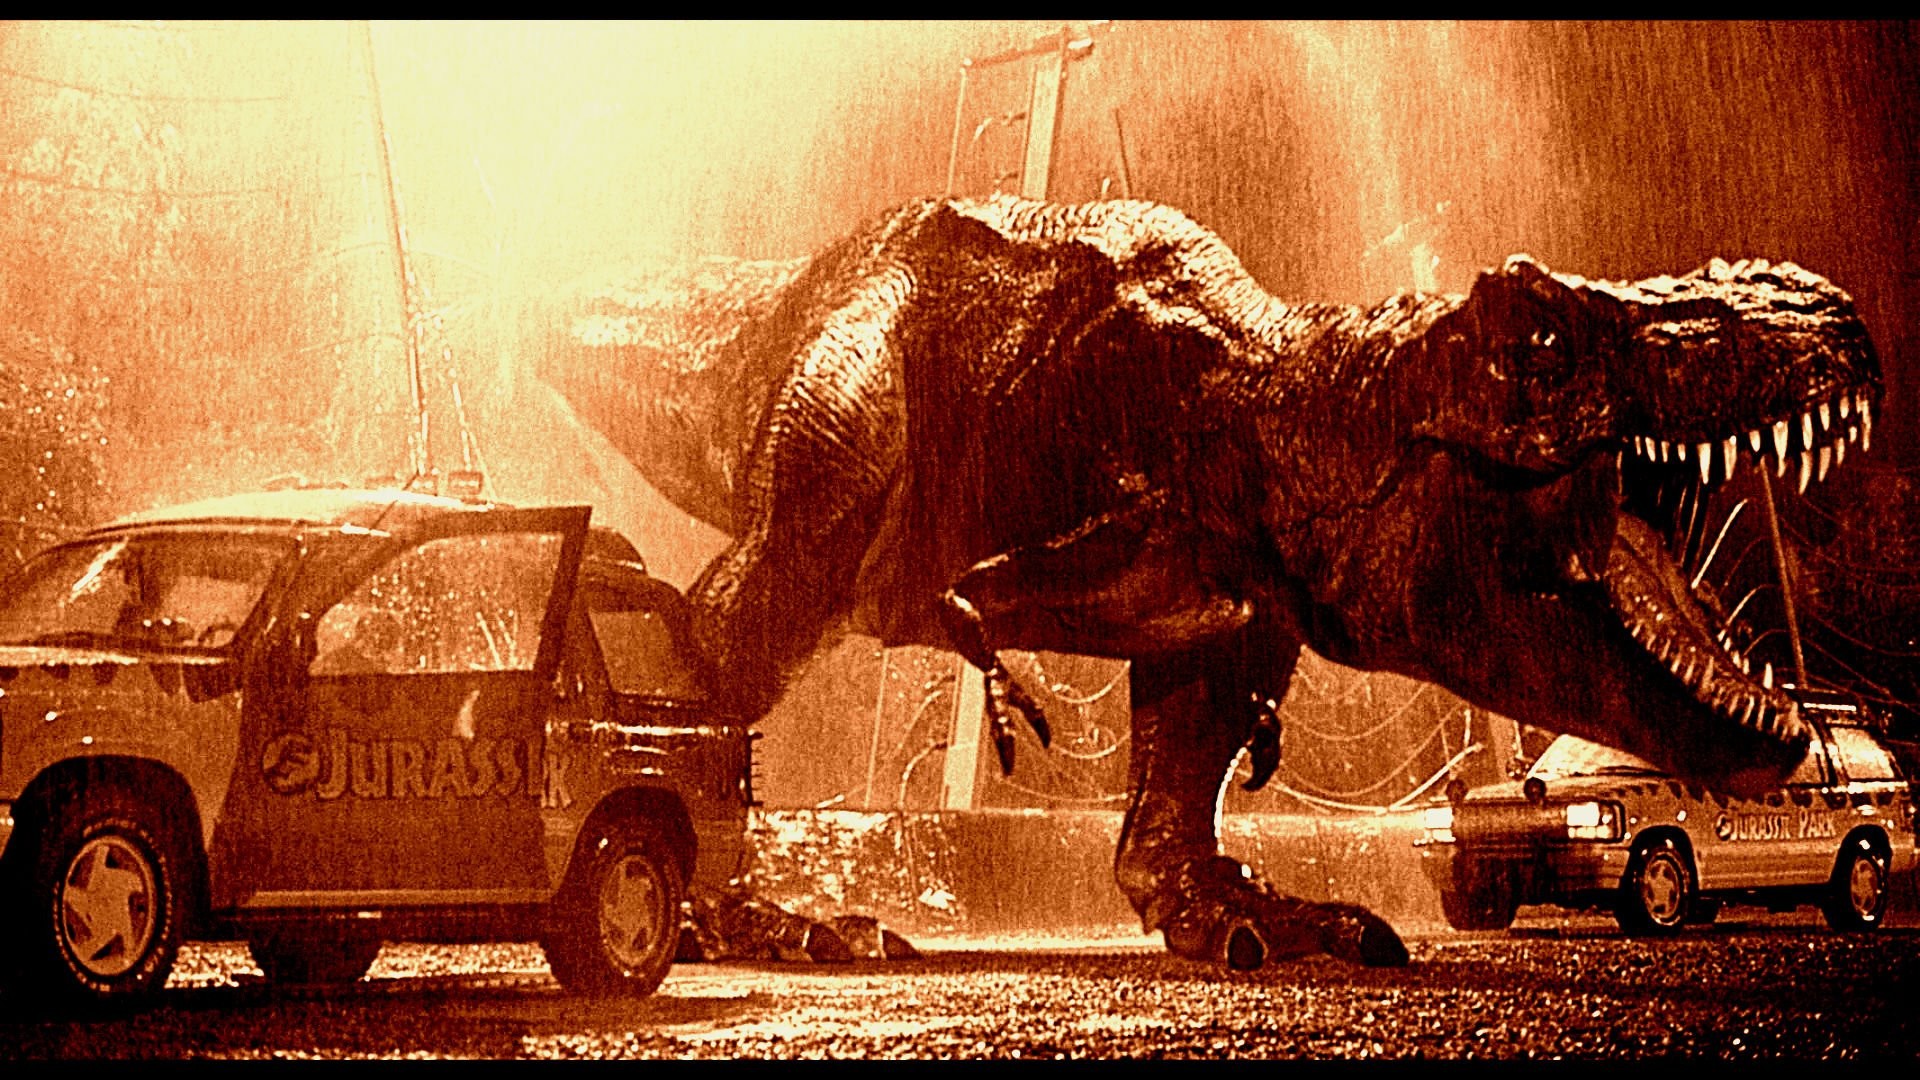 1920x1080 JURASSIC PARK adventure sci-fi fantasy dinosaur movie film rain dark  wallpaper |  | 289299 | WallpaperUP